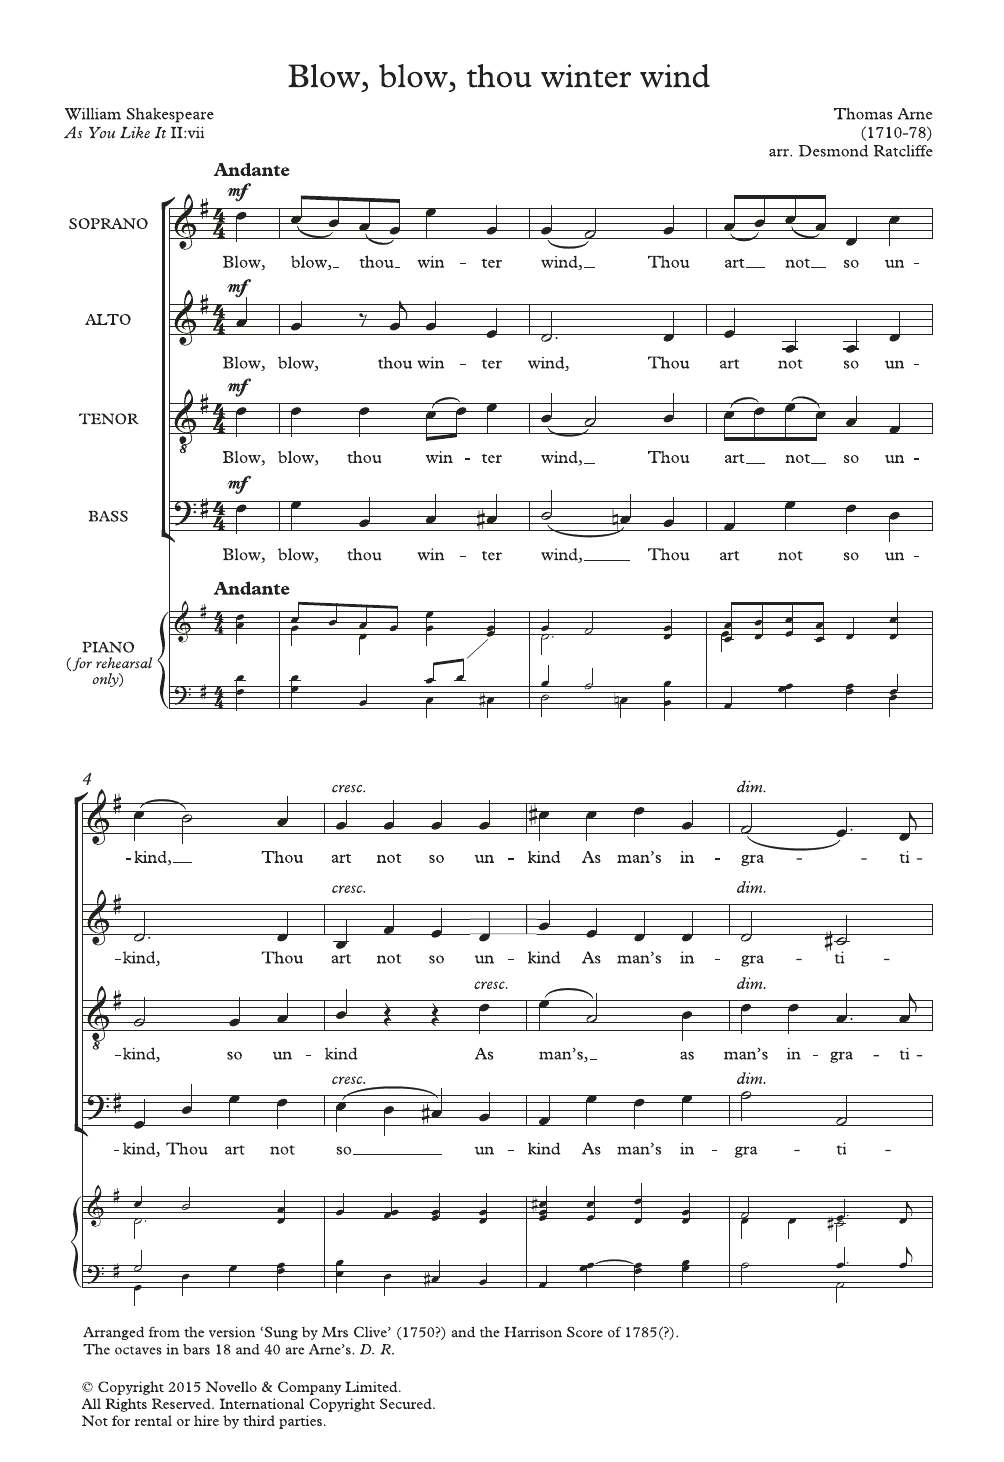 Thomas Arne Blow, Blow, Thou Winter Wind (arr. Desmond Ratcliffe) Sheet Music Notes & Chords for SATB Choir - Download or Print PDF